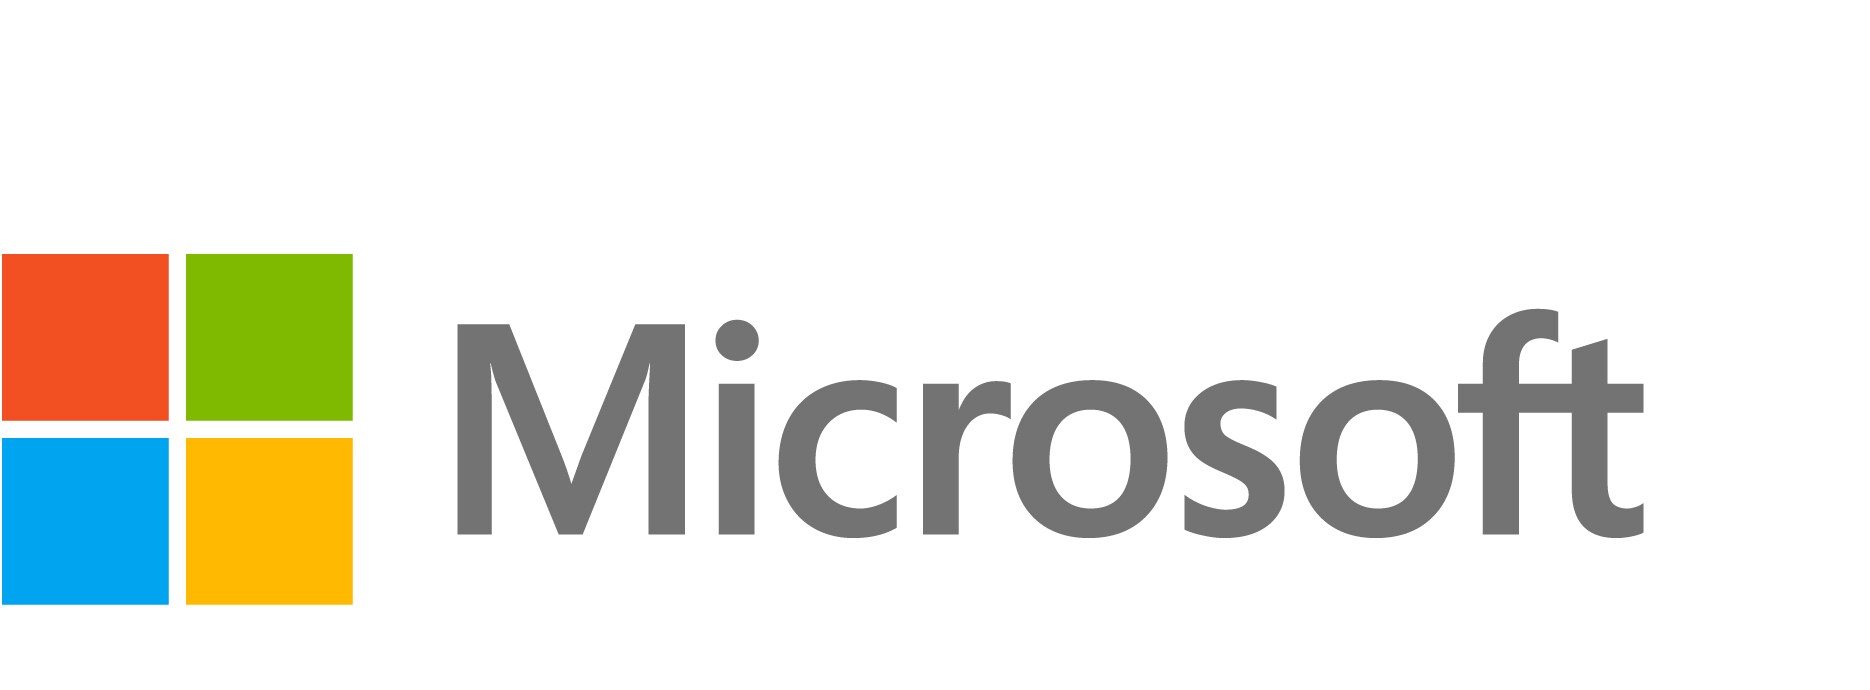 Microsoft 365 (E5) Enterprise Plan 5 from CDW for Non-Profits Software Subscription